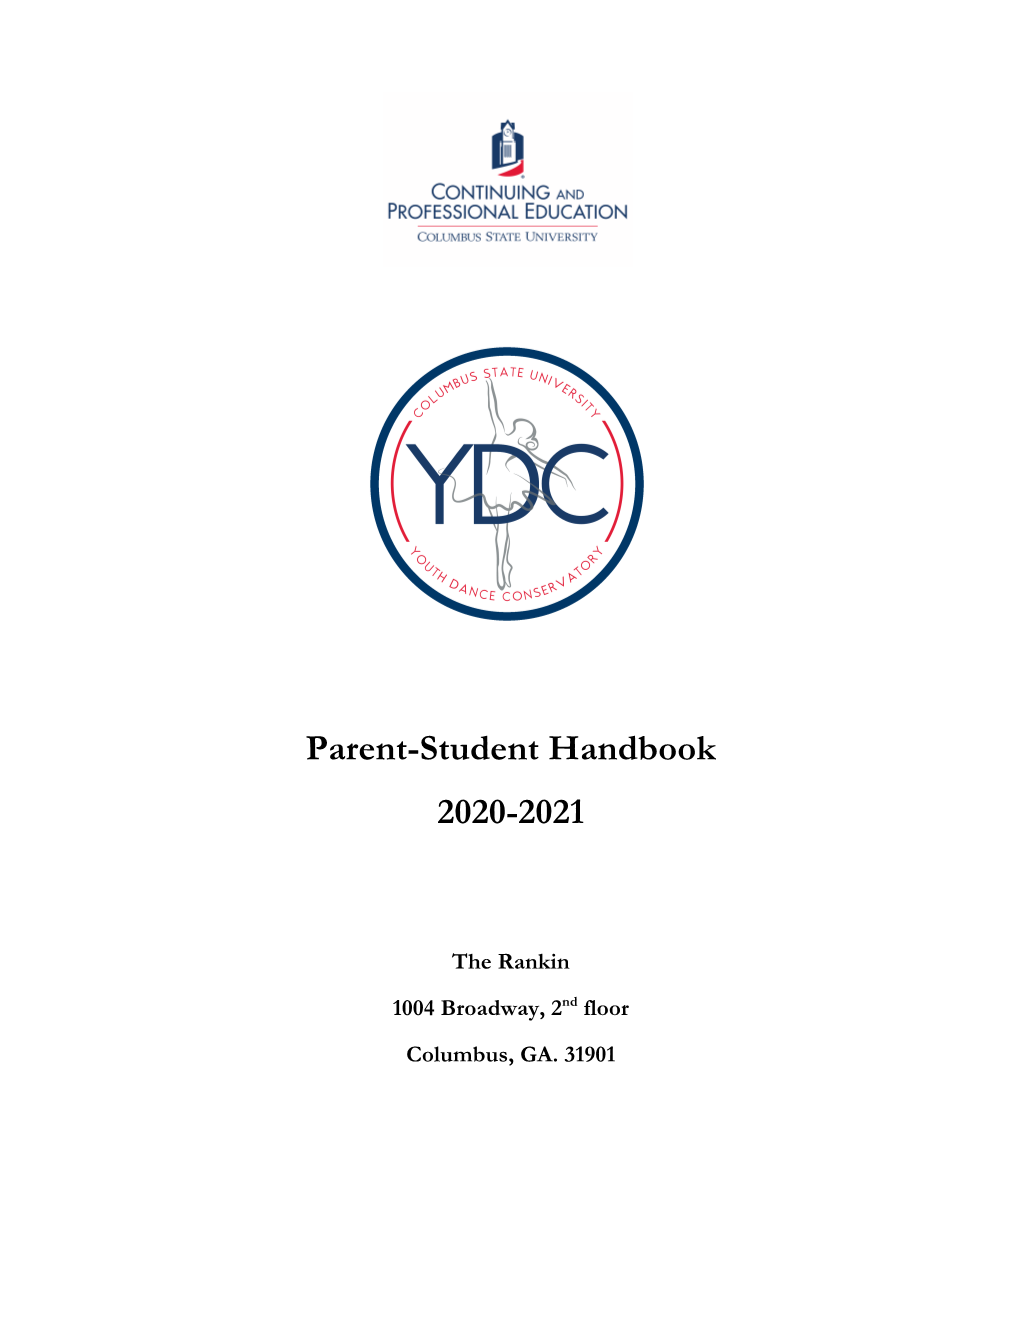 Parent-Student Handbook 2020-2021